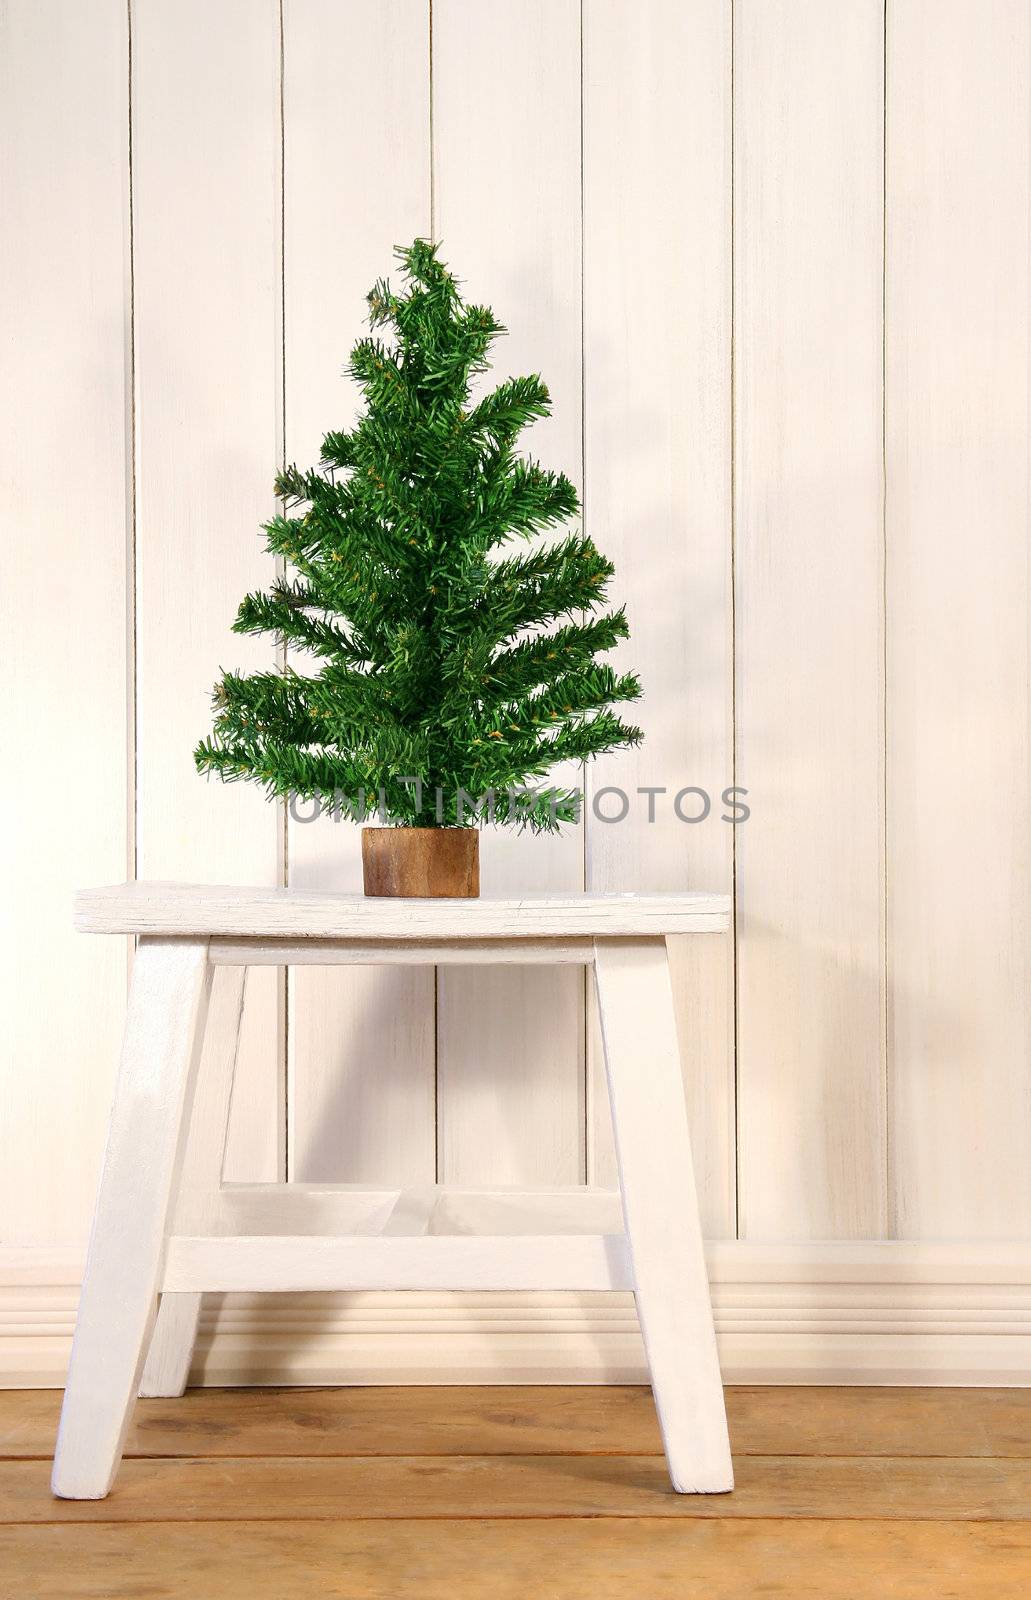 Little green fir tree on rustric white bench